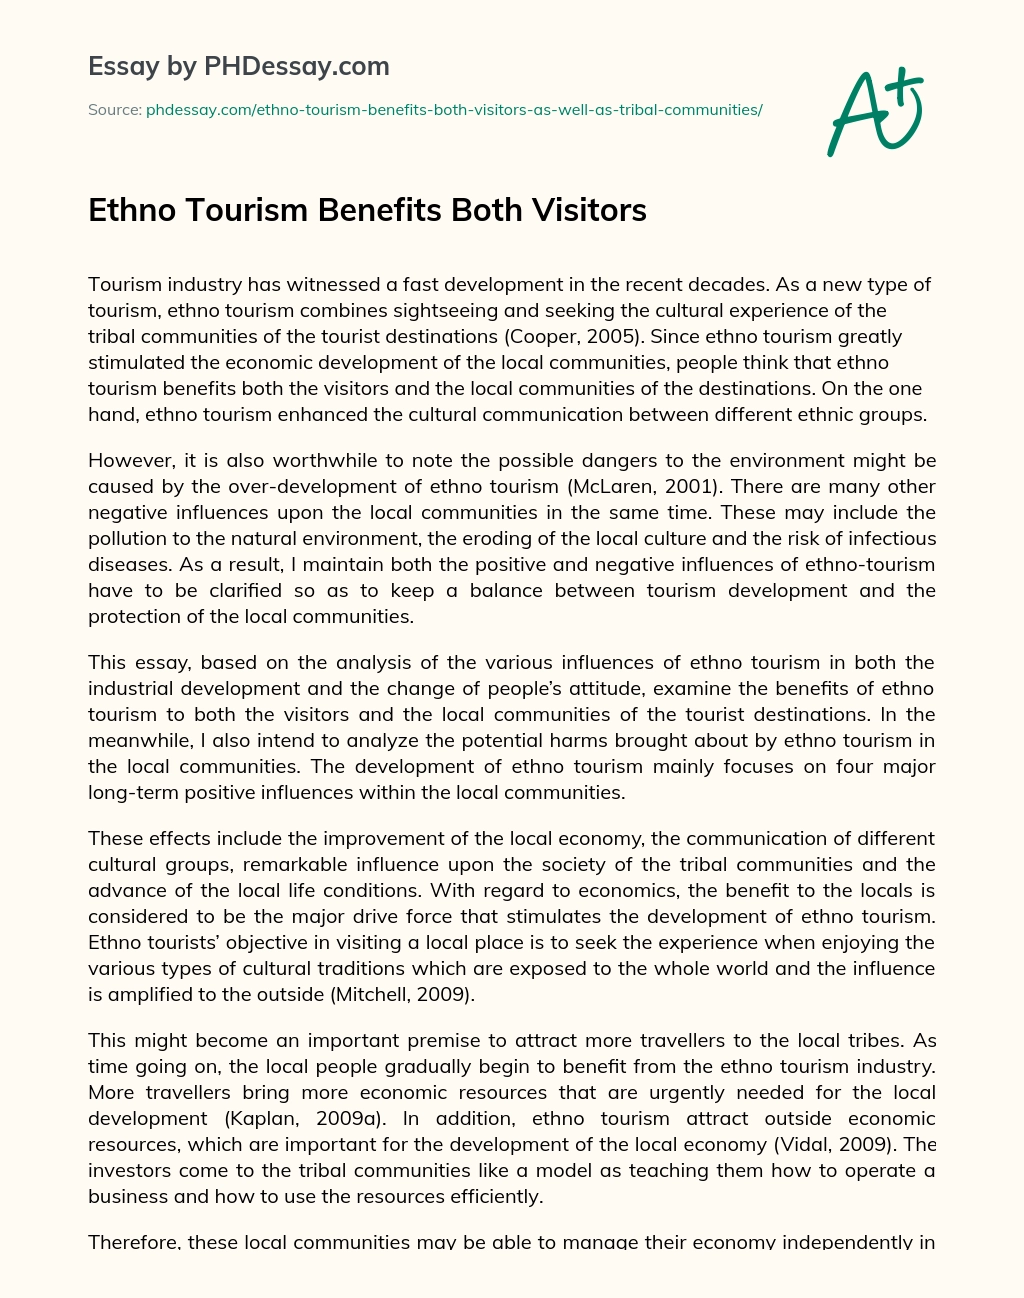 Ethno Tourism Benefits Both Visitors essay